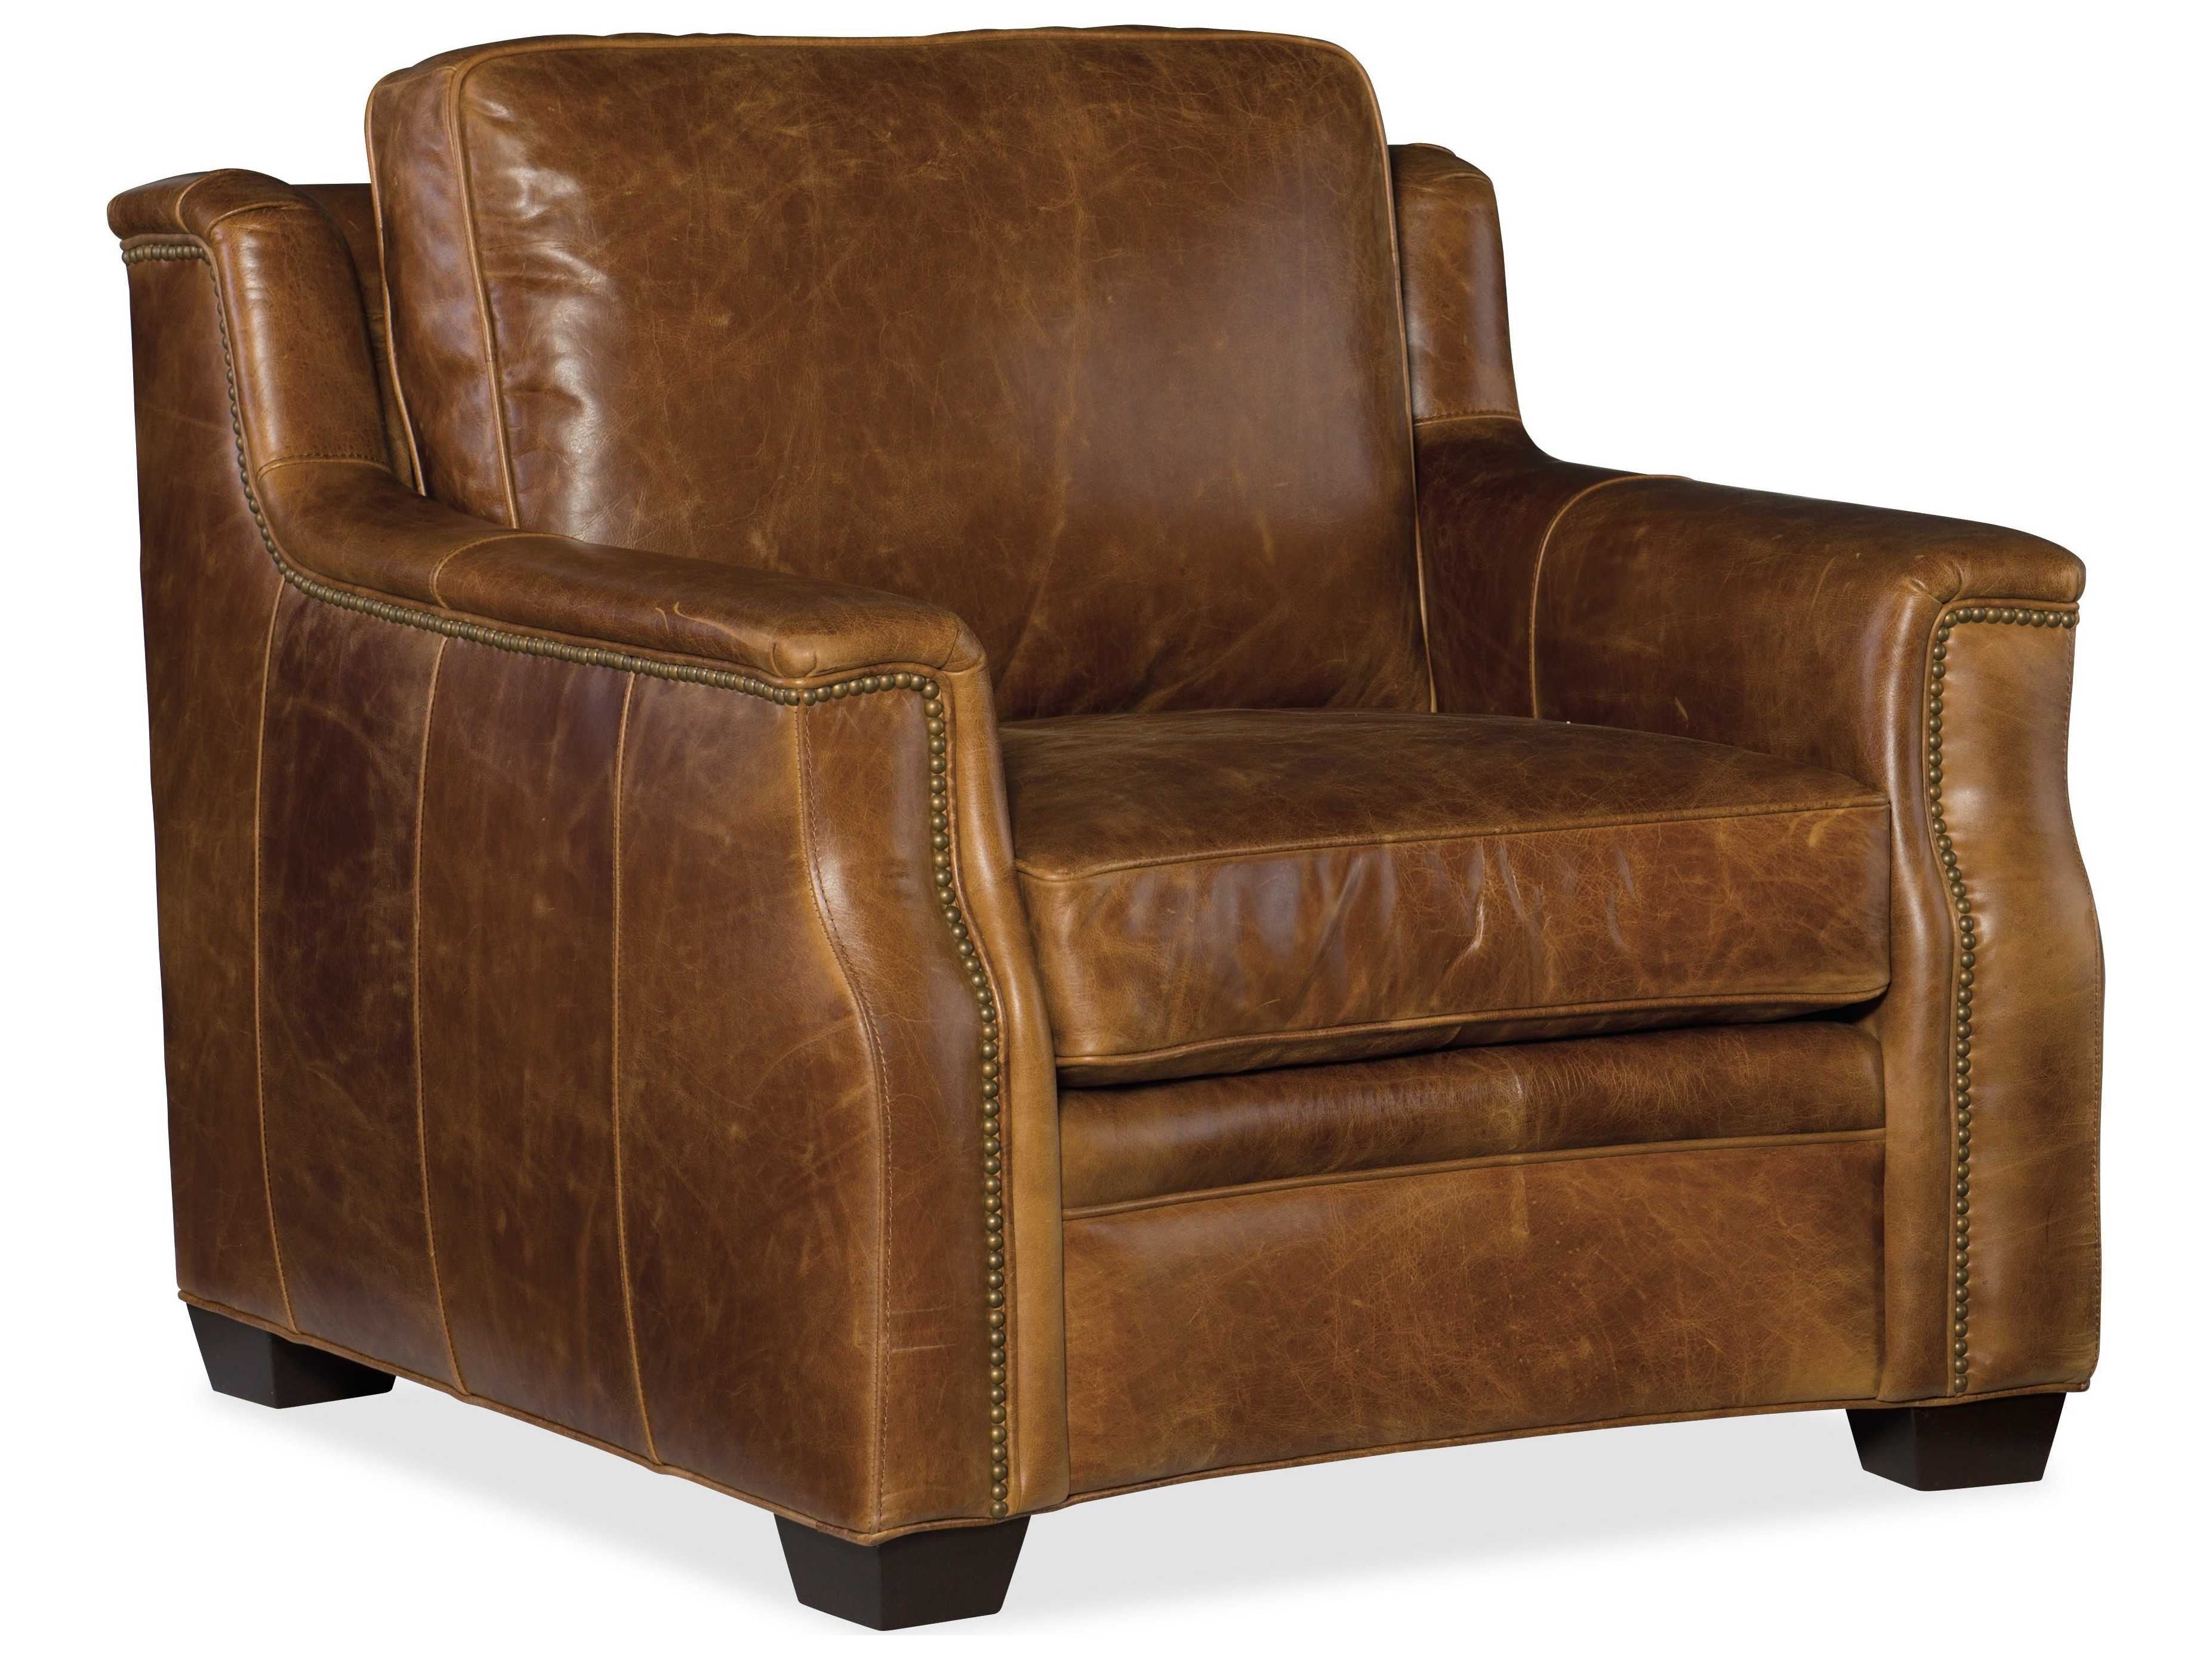 hooker furniture yates leather sofa